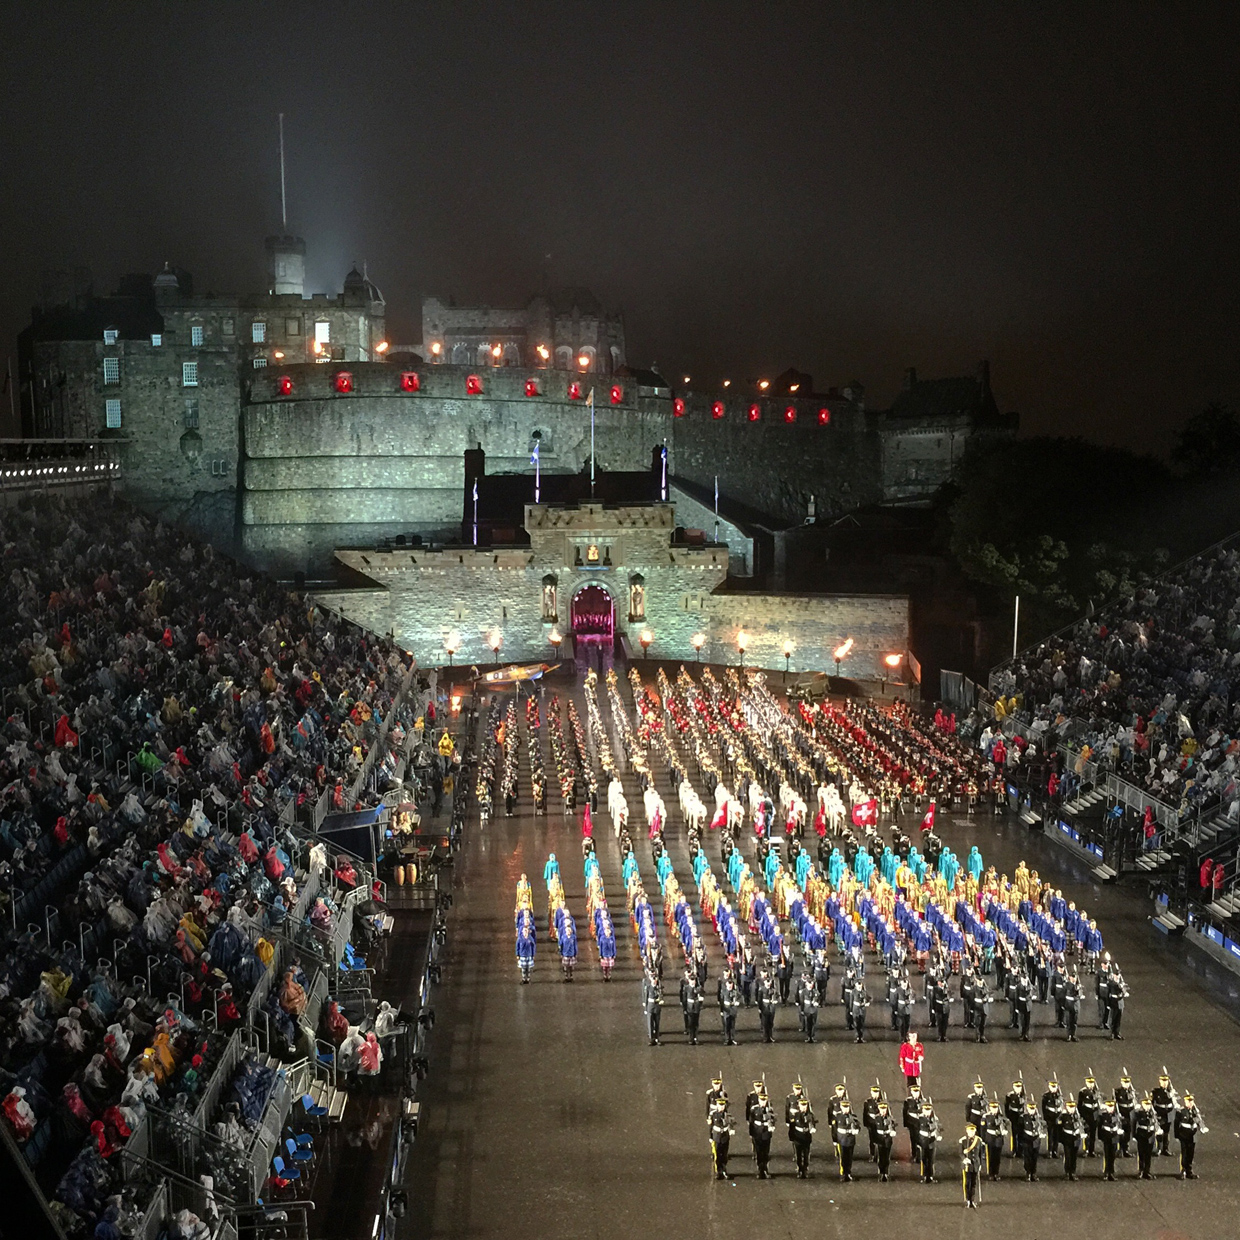 Edinburgh Castle and the Royal Edinburgh Military Tattoo